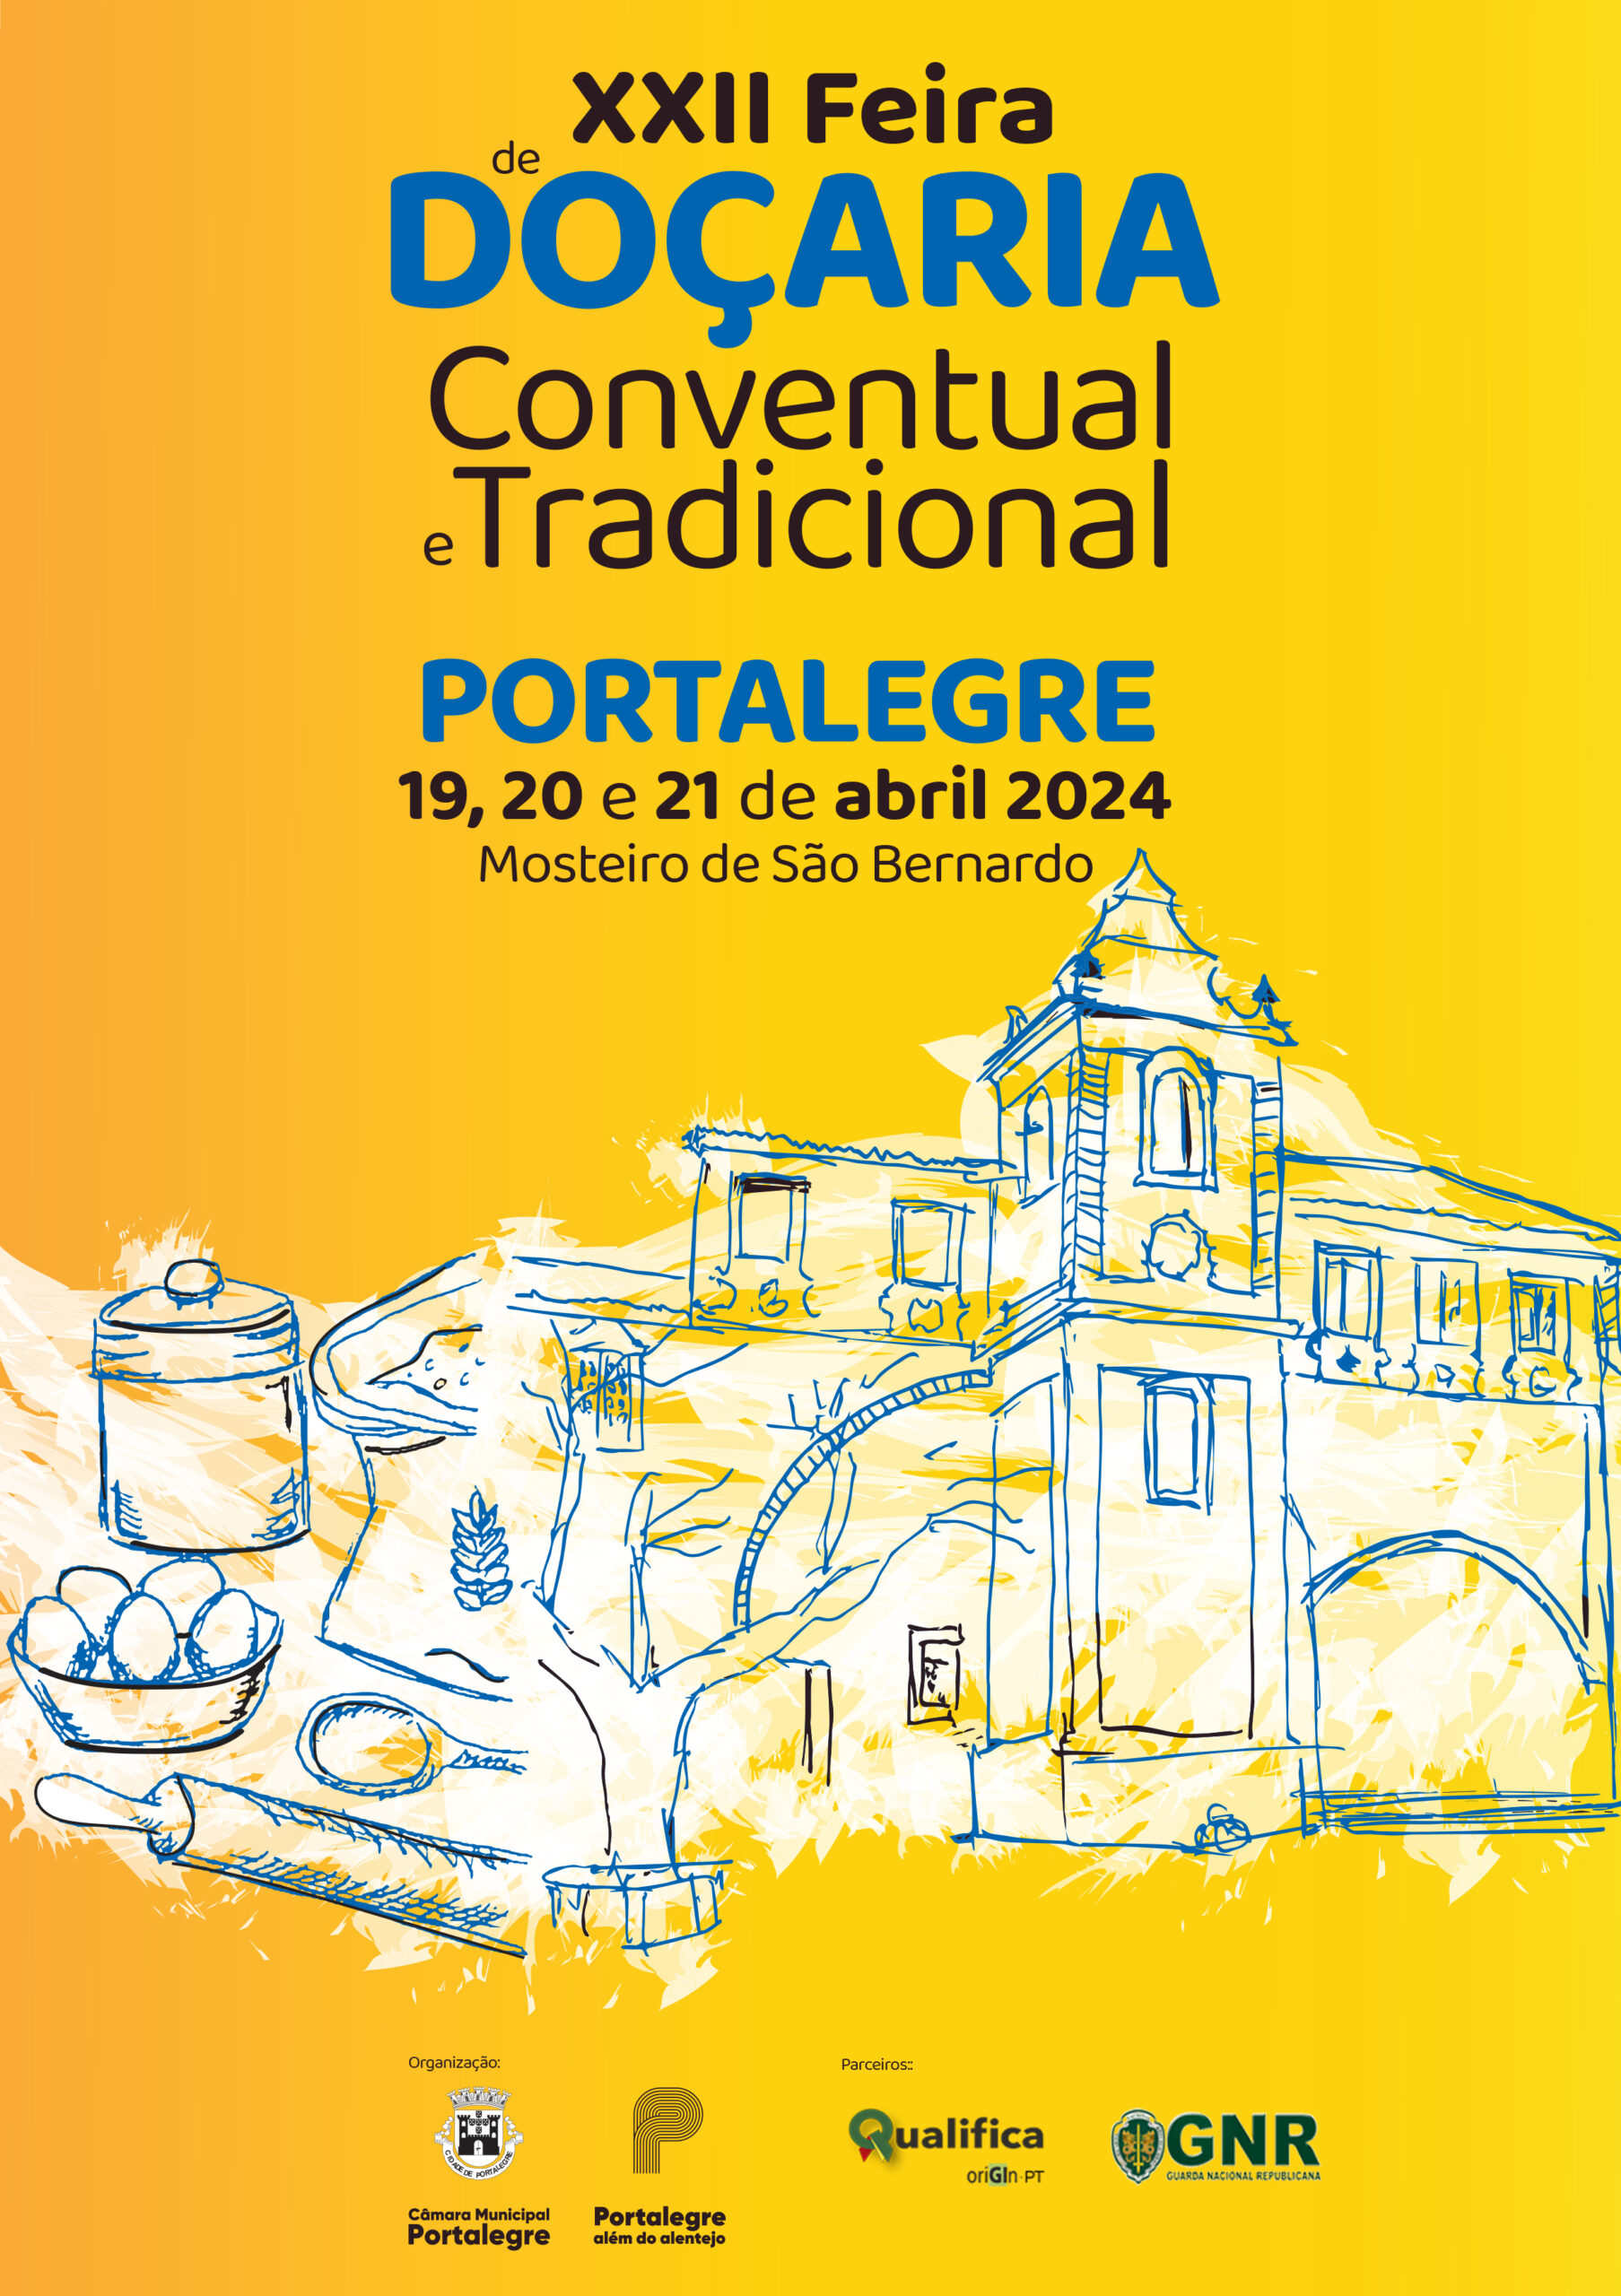 XXII Feira de Doçaria Conventual e Tradicional de Portalegre